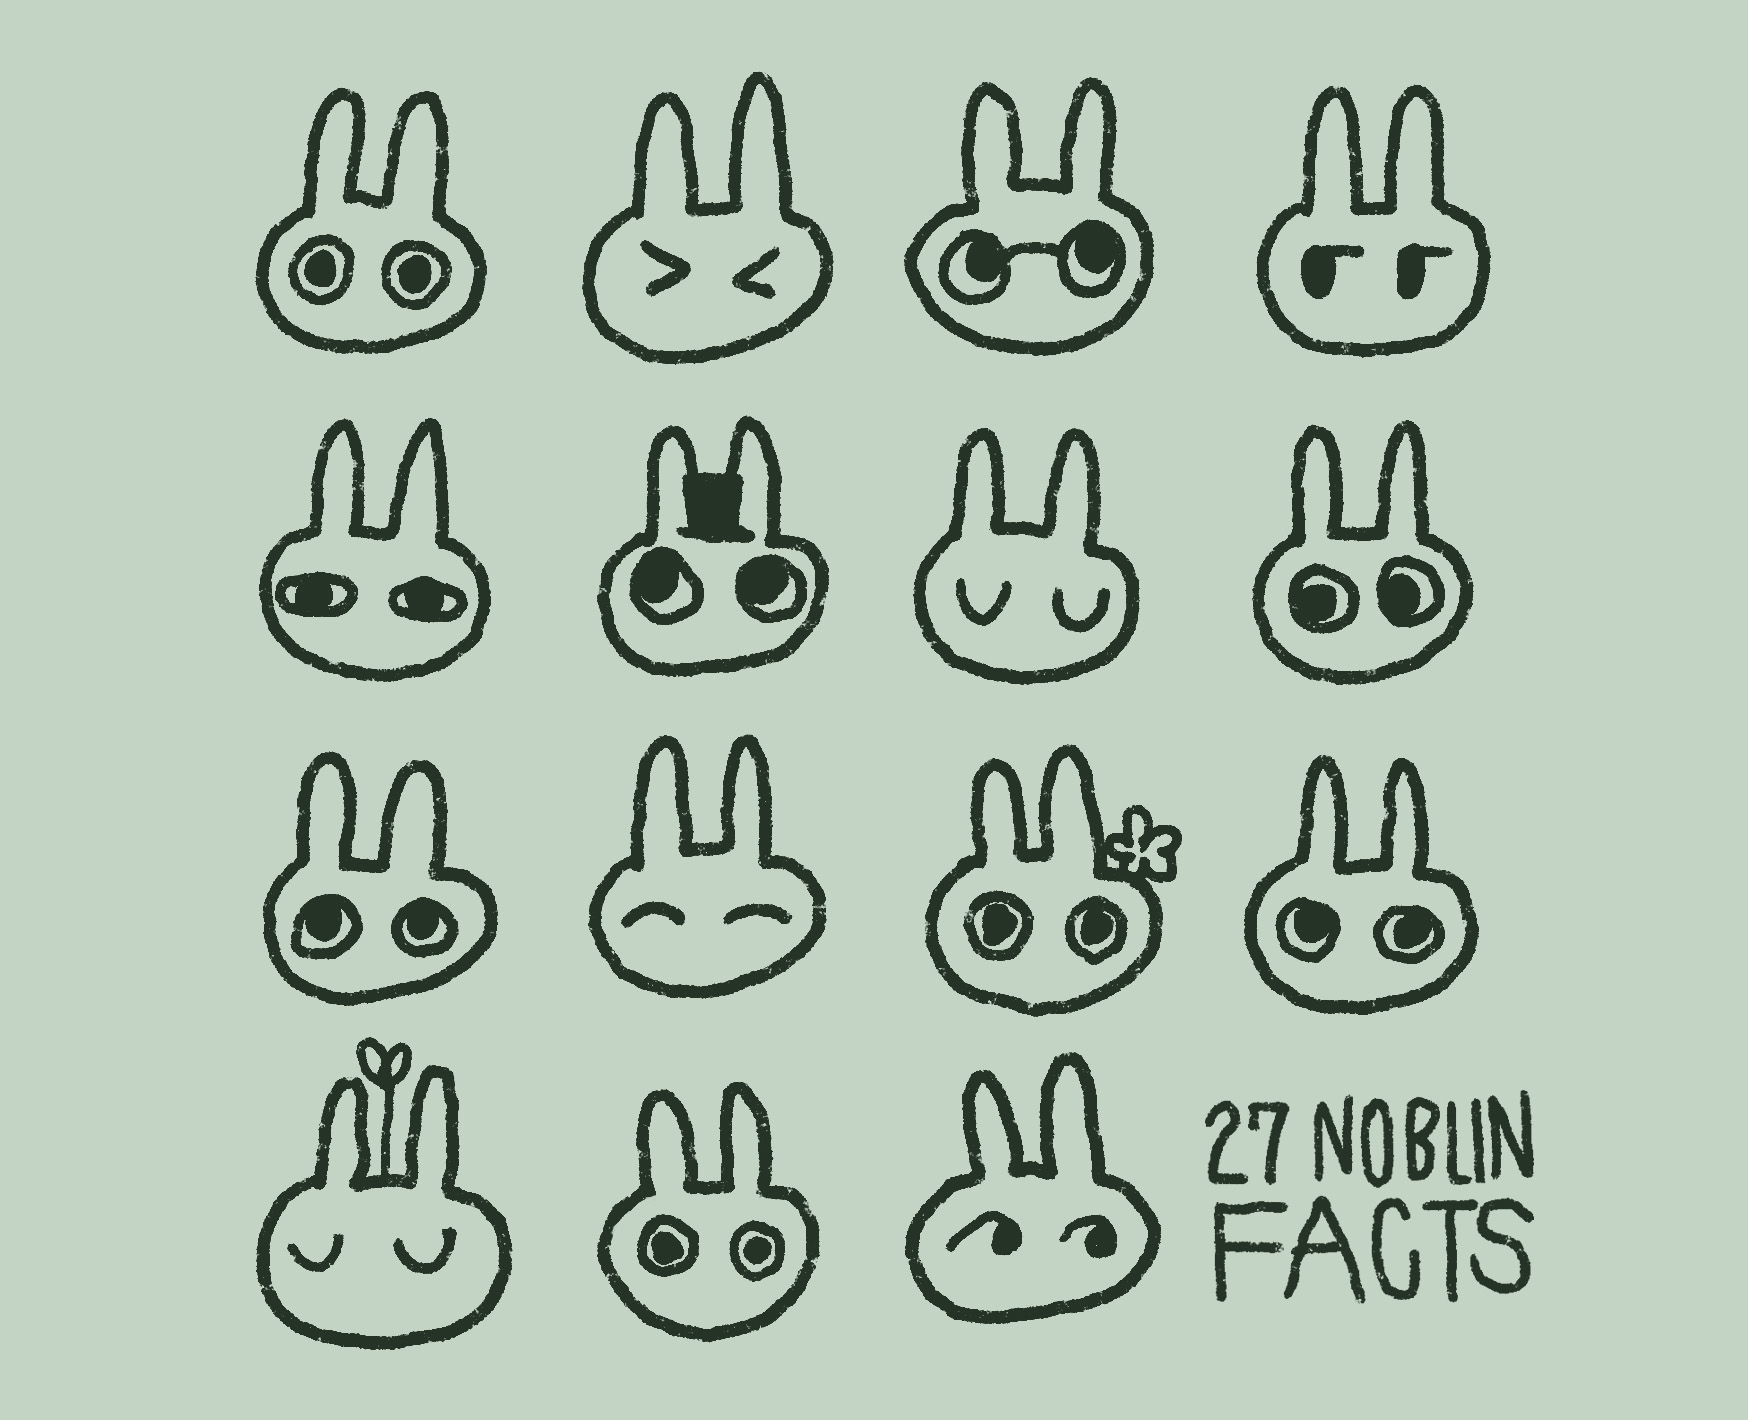 27 Noblin Facts